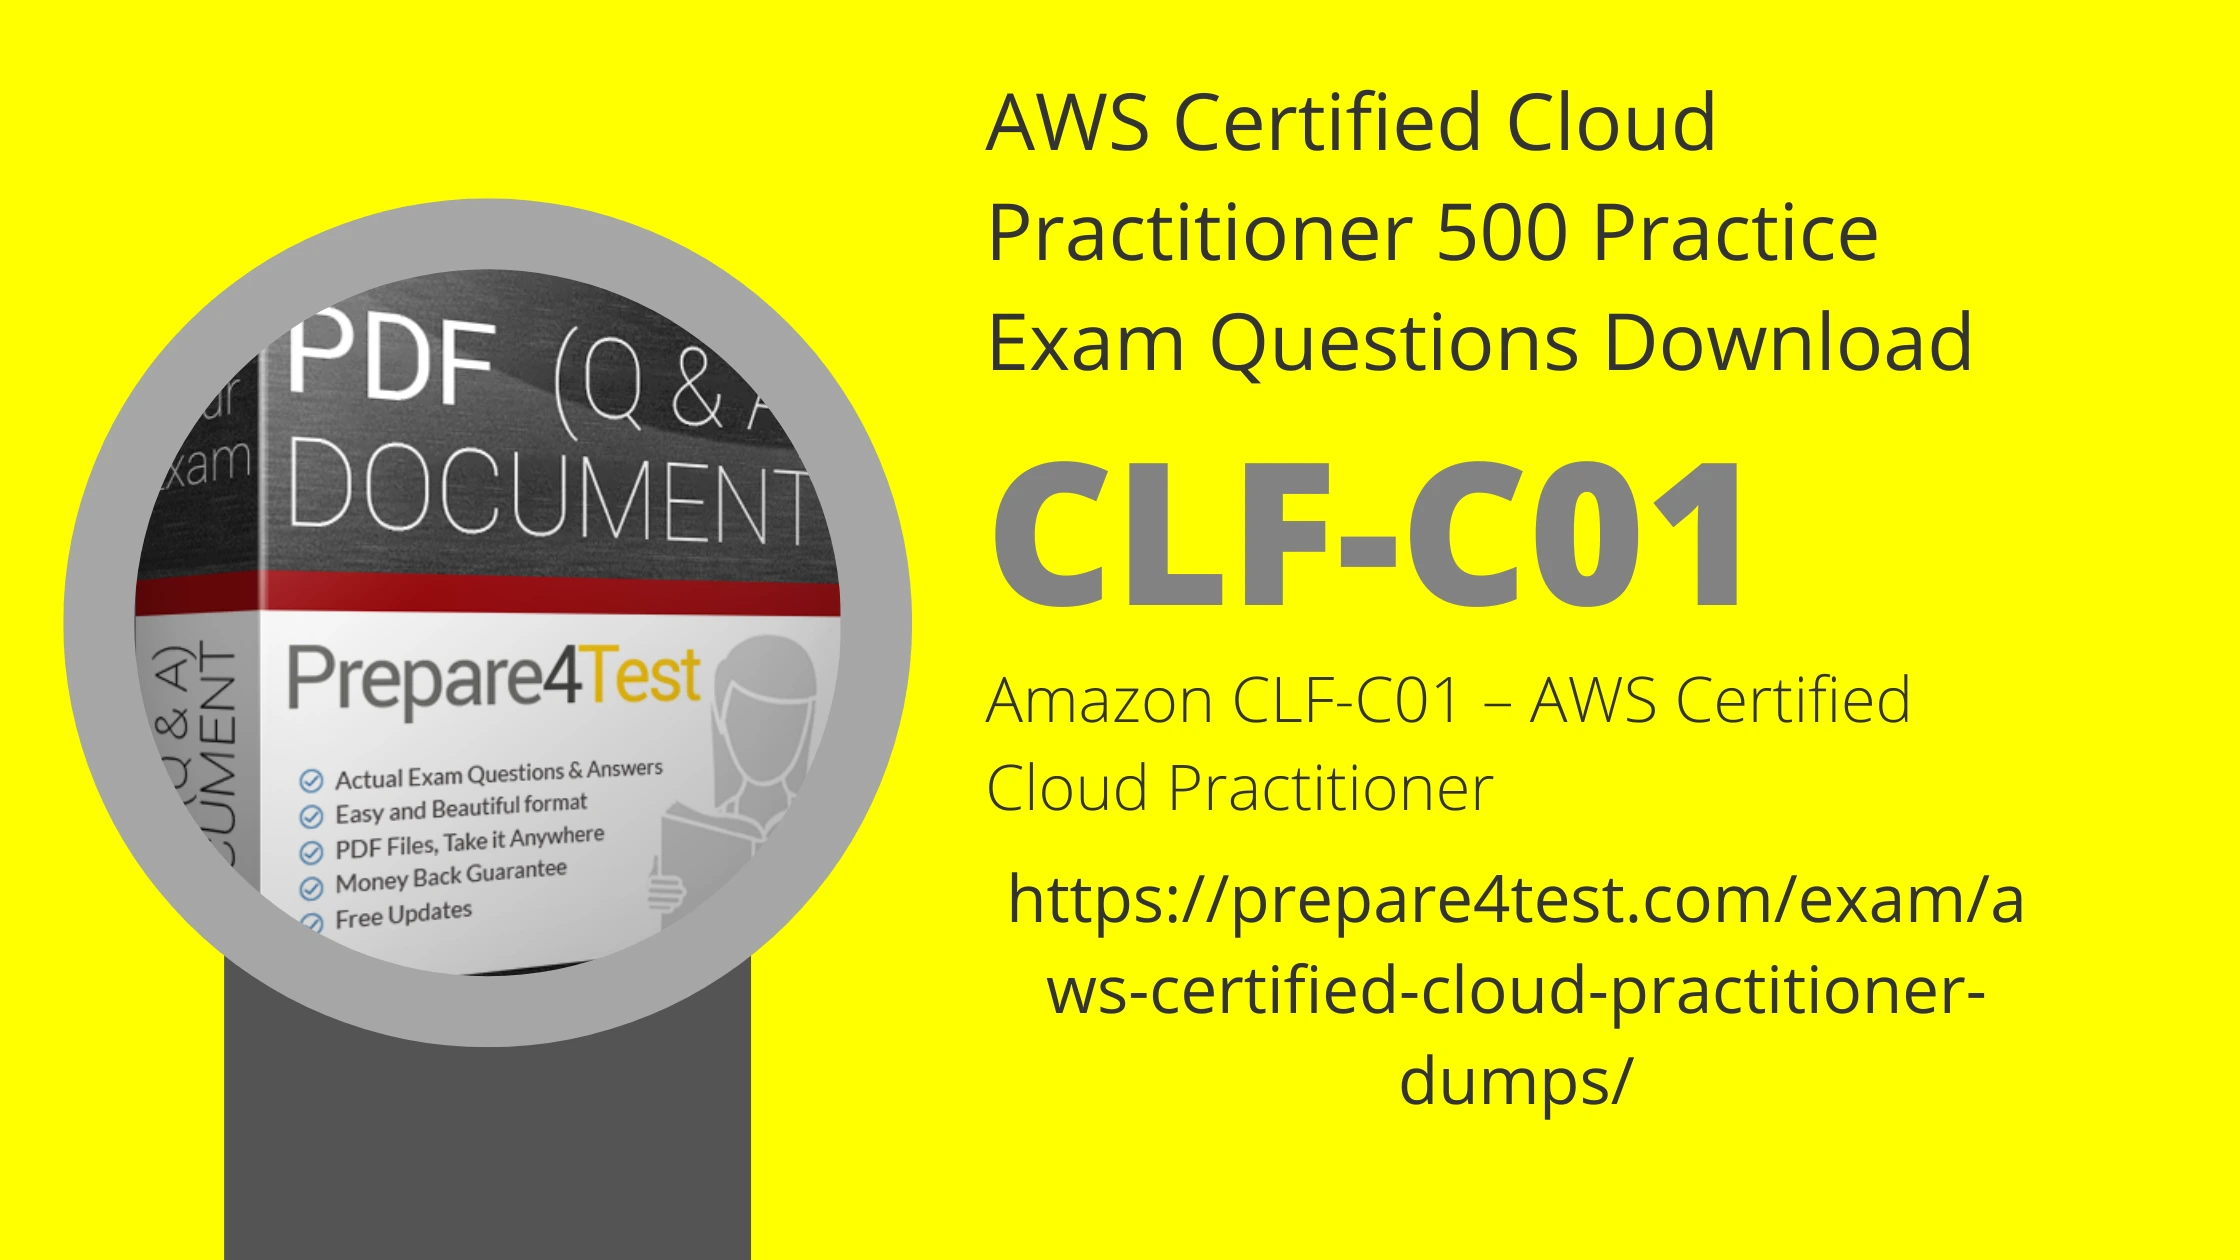 AWS Certified Cloud Practitioner 500 Practice Exam Questions Download